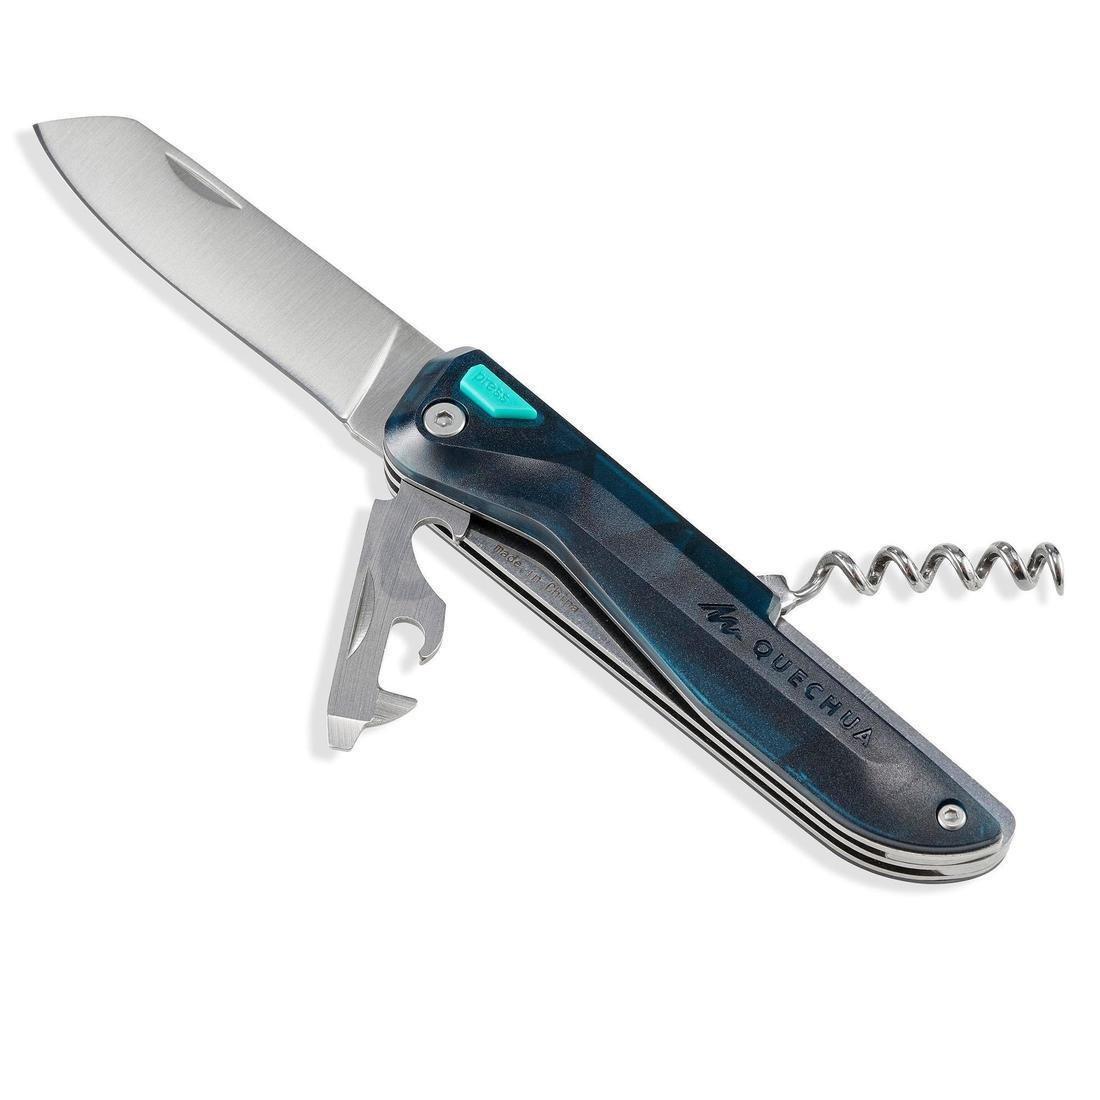 QUECHUA - Multi-Tool Hiking Knife Mh500 With Locking Blade, Dark Petrol Blue